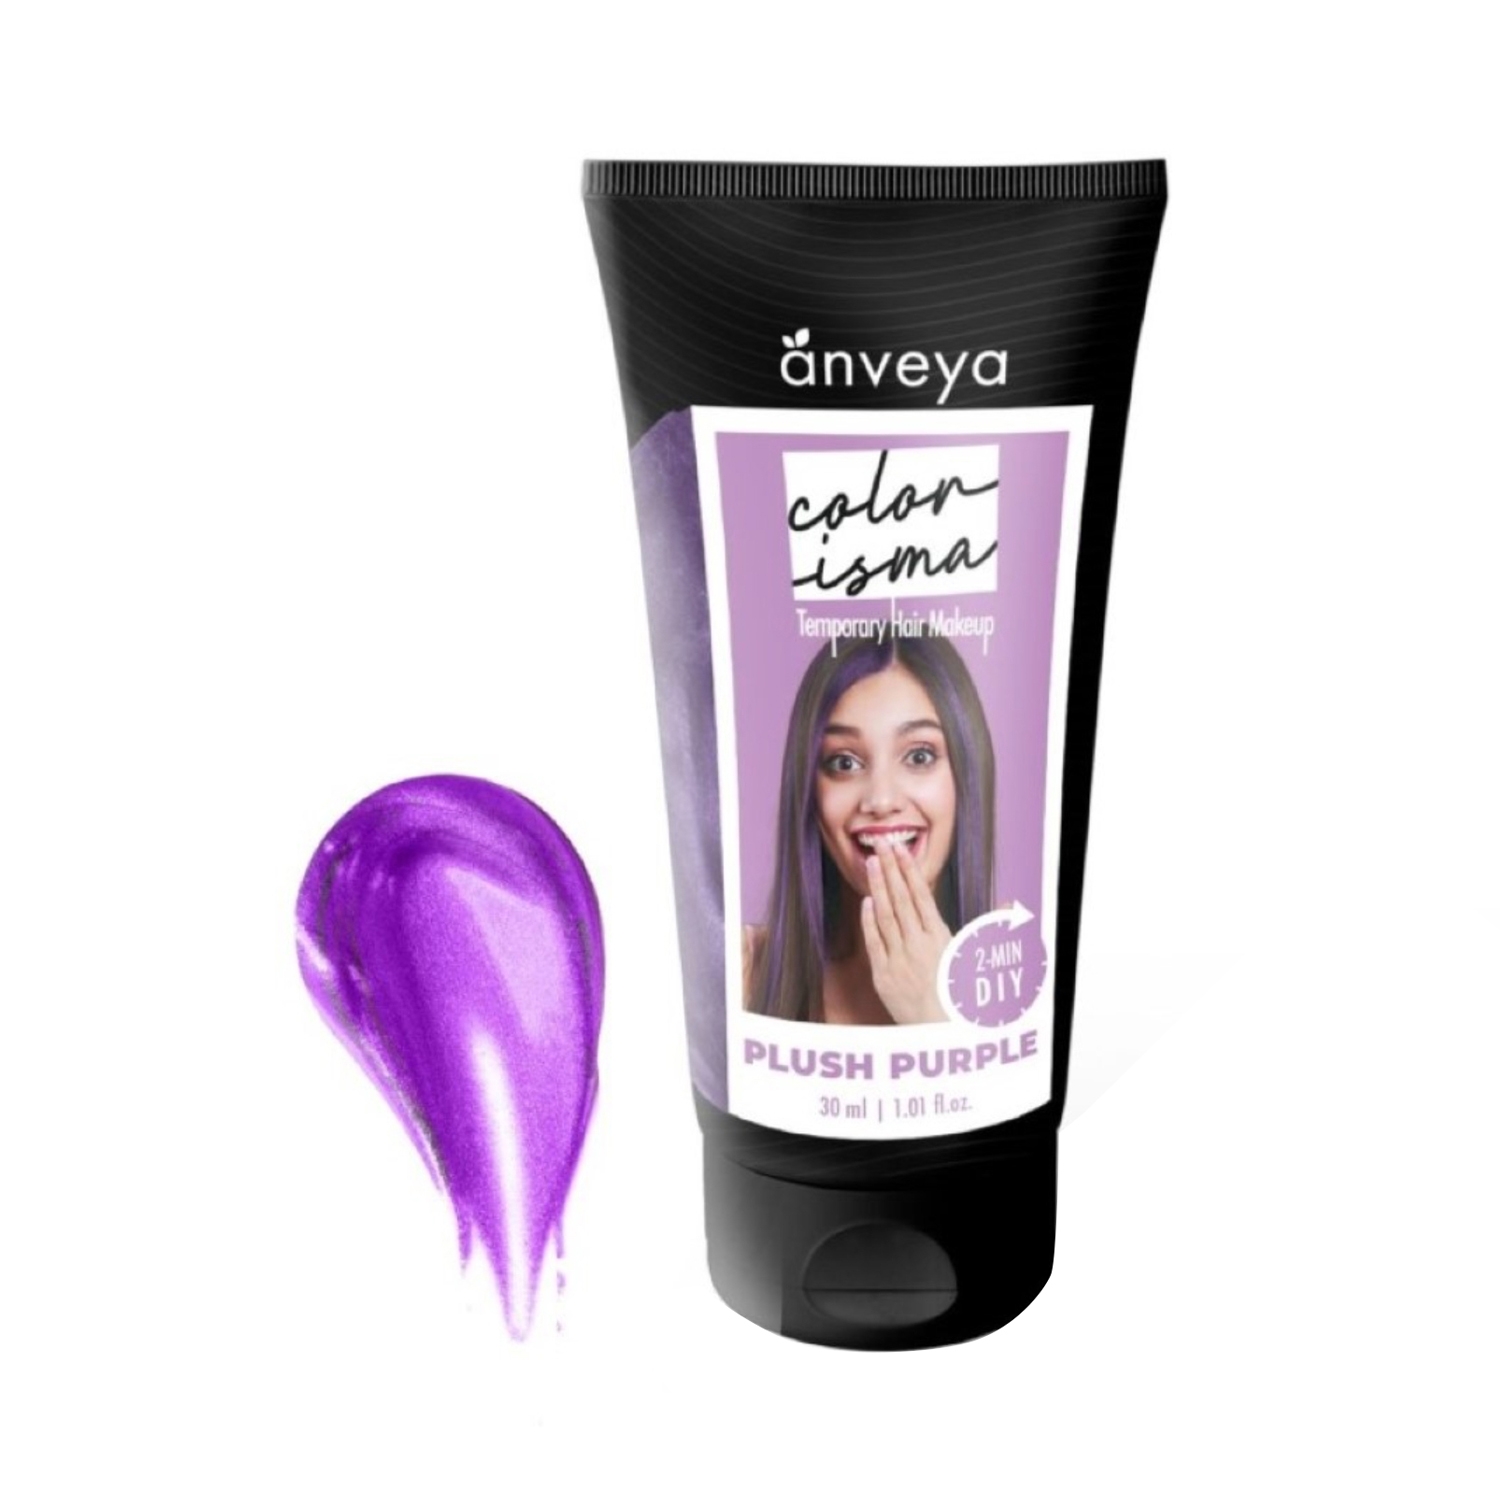 Anveya Colorisma Hair Color Makeup - Plush Purple (30ml)